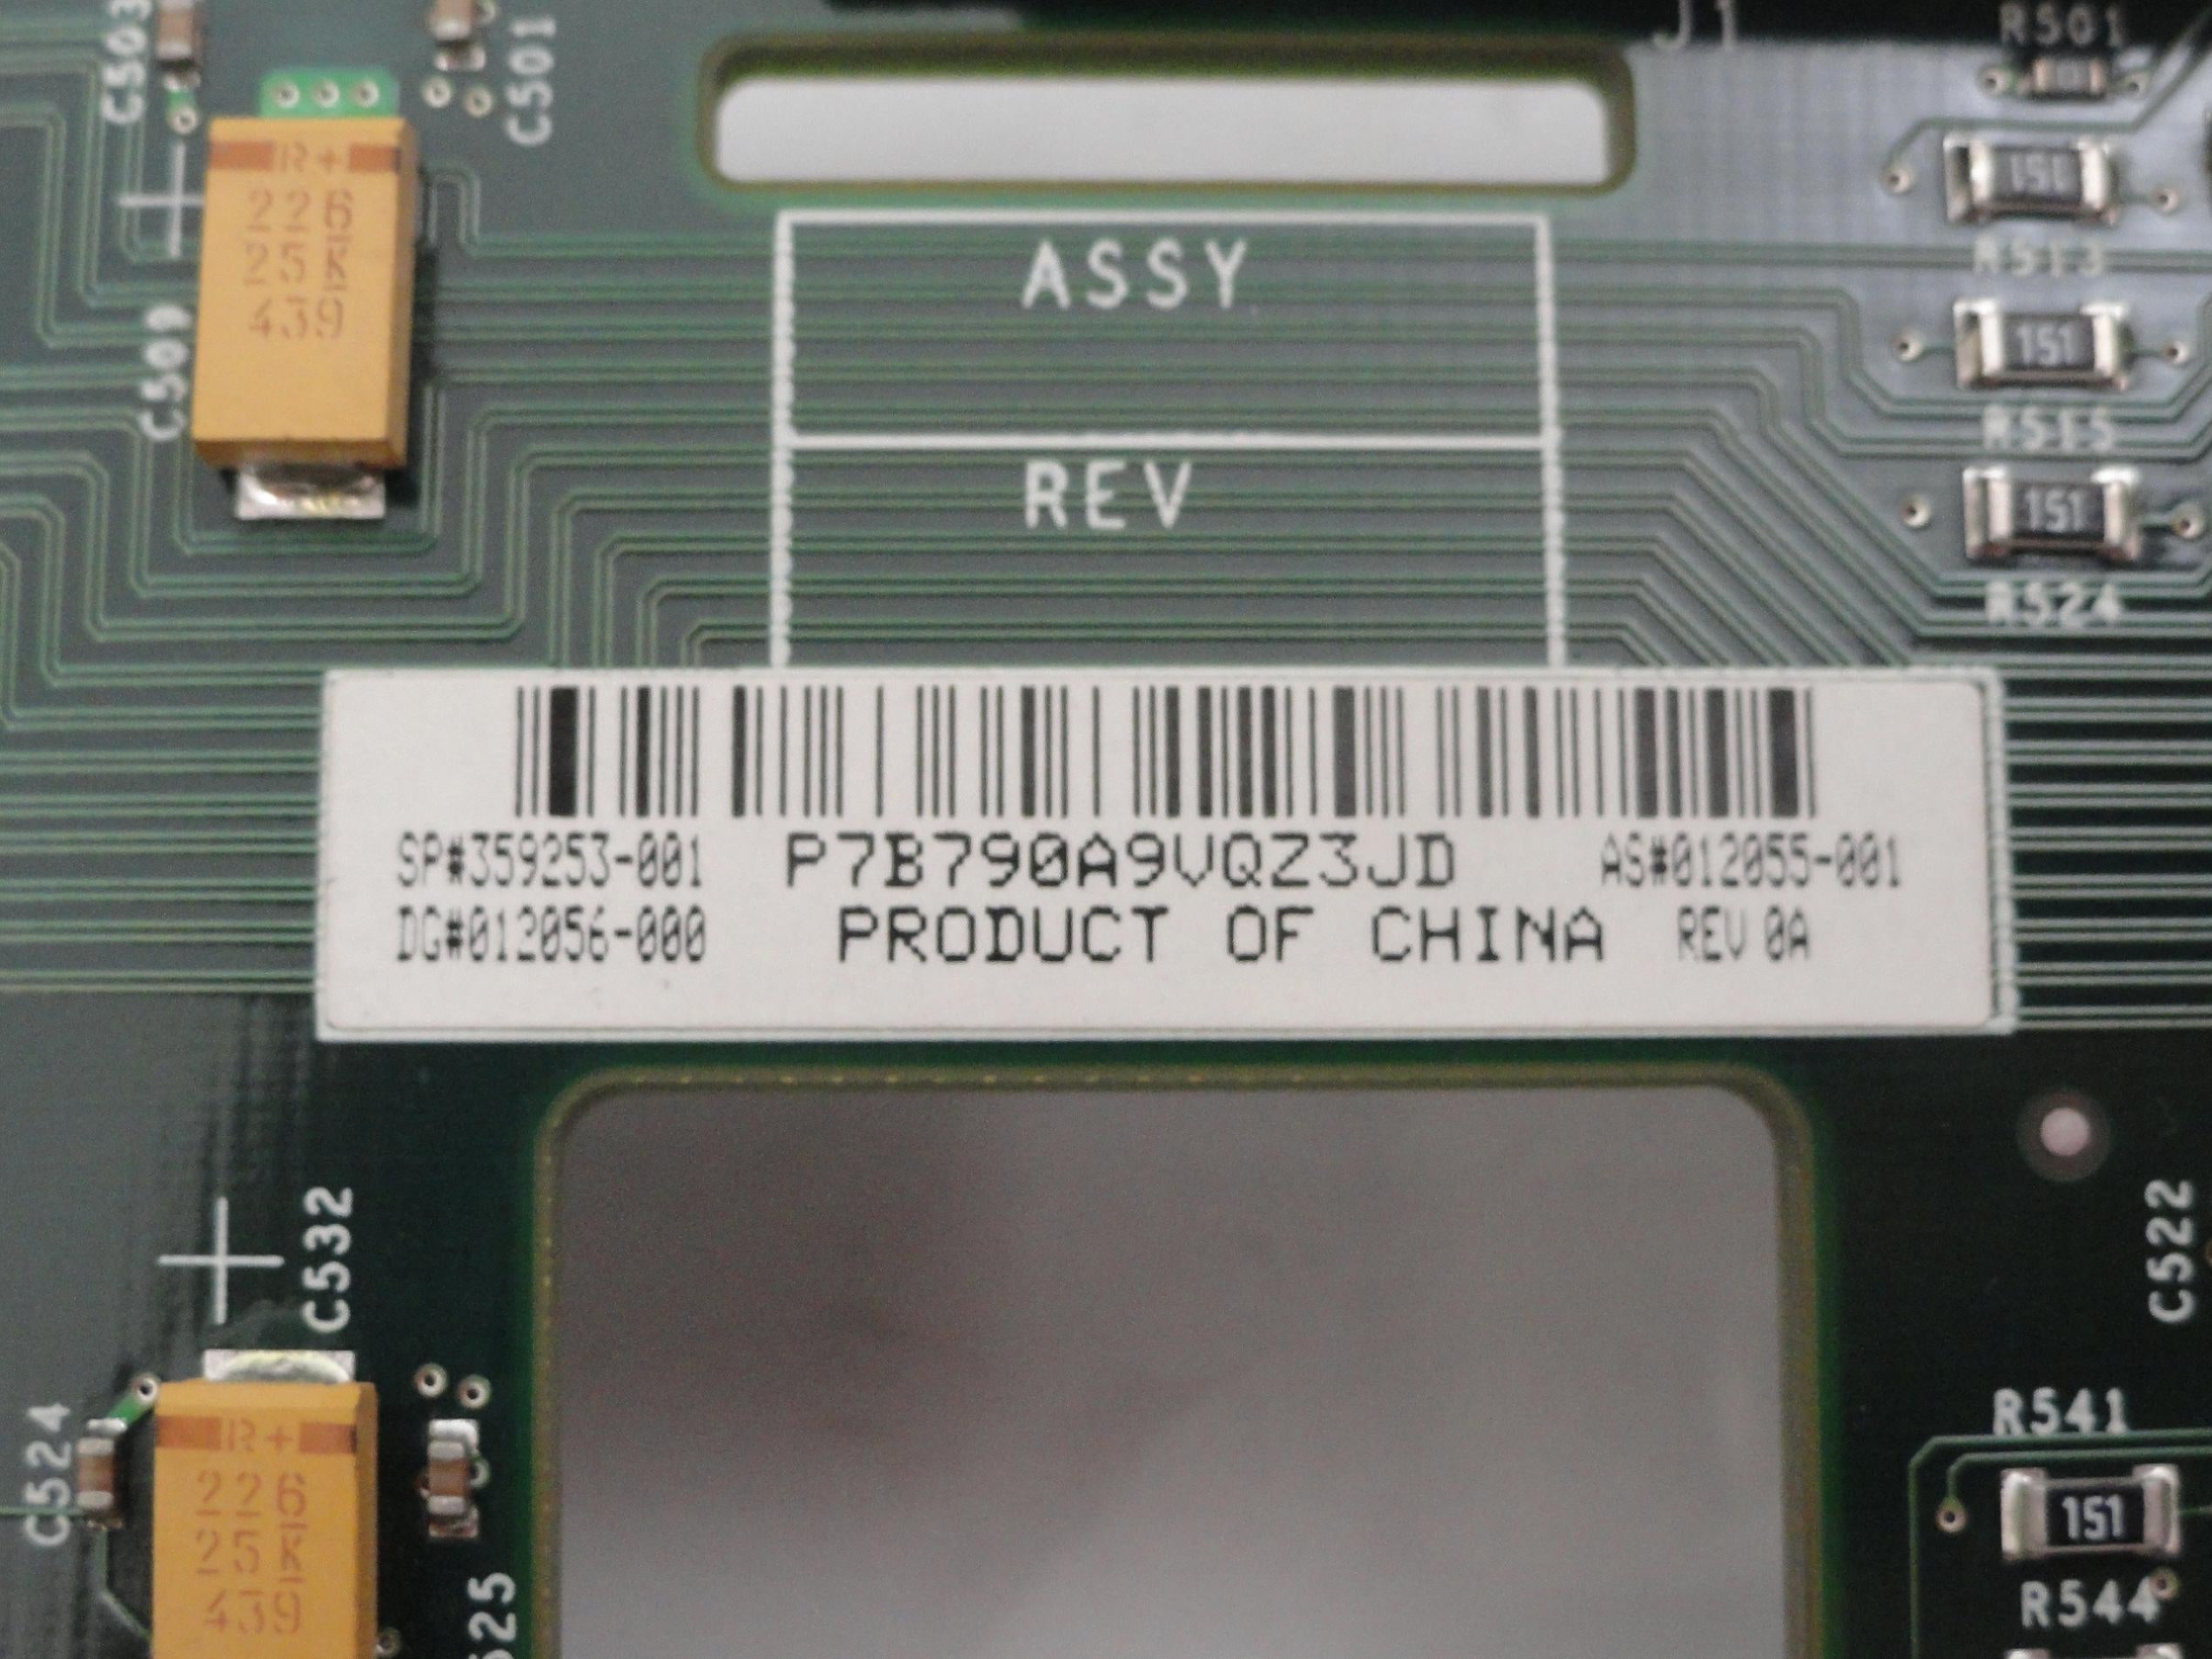 PR17127_359253-001_HP Six Bay SCSI 80 Pin Backplane and Media Board - Image2